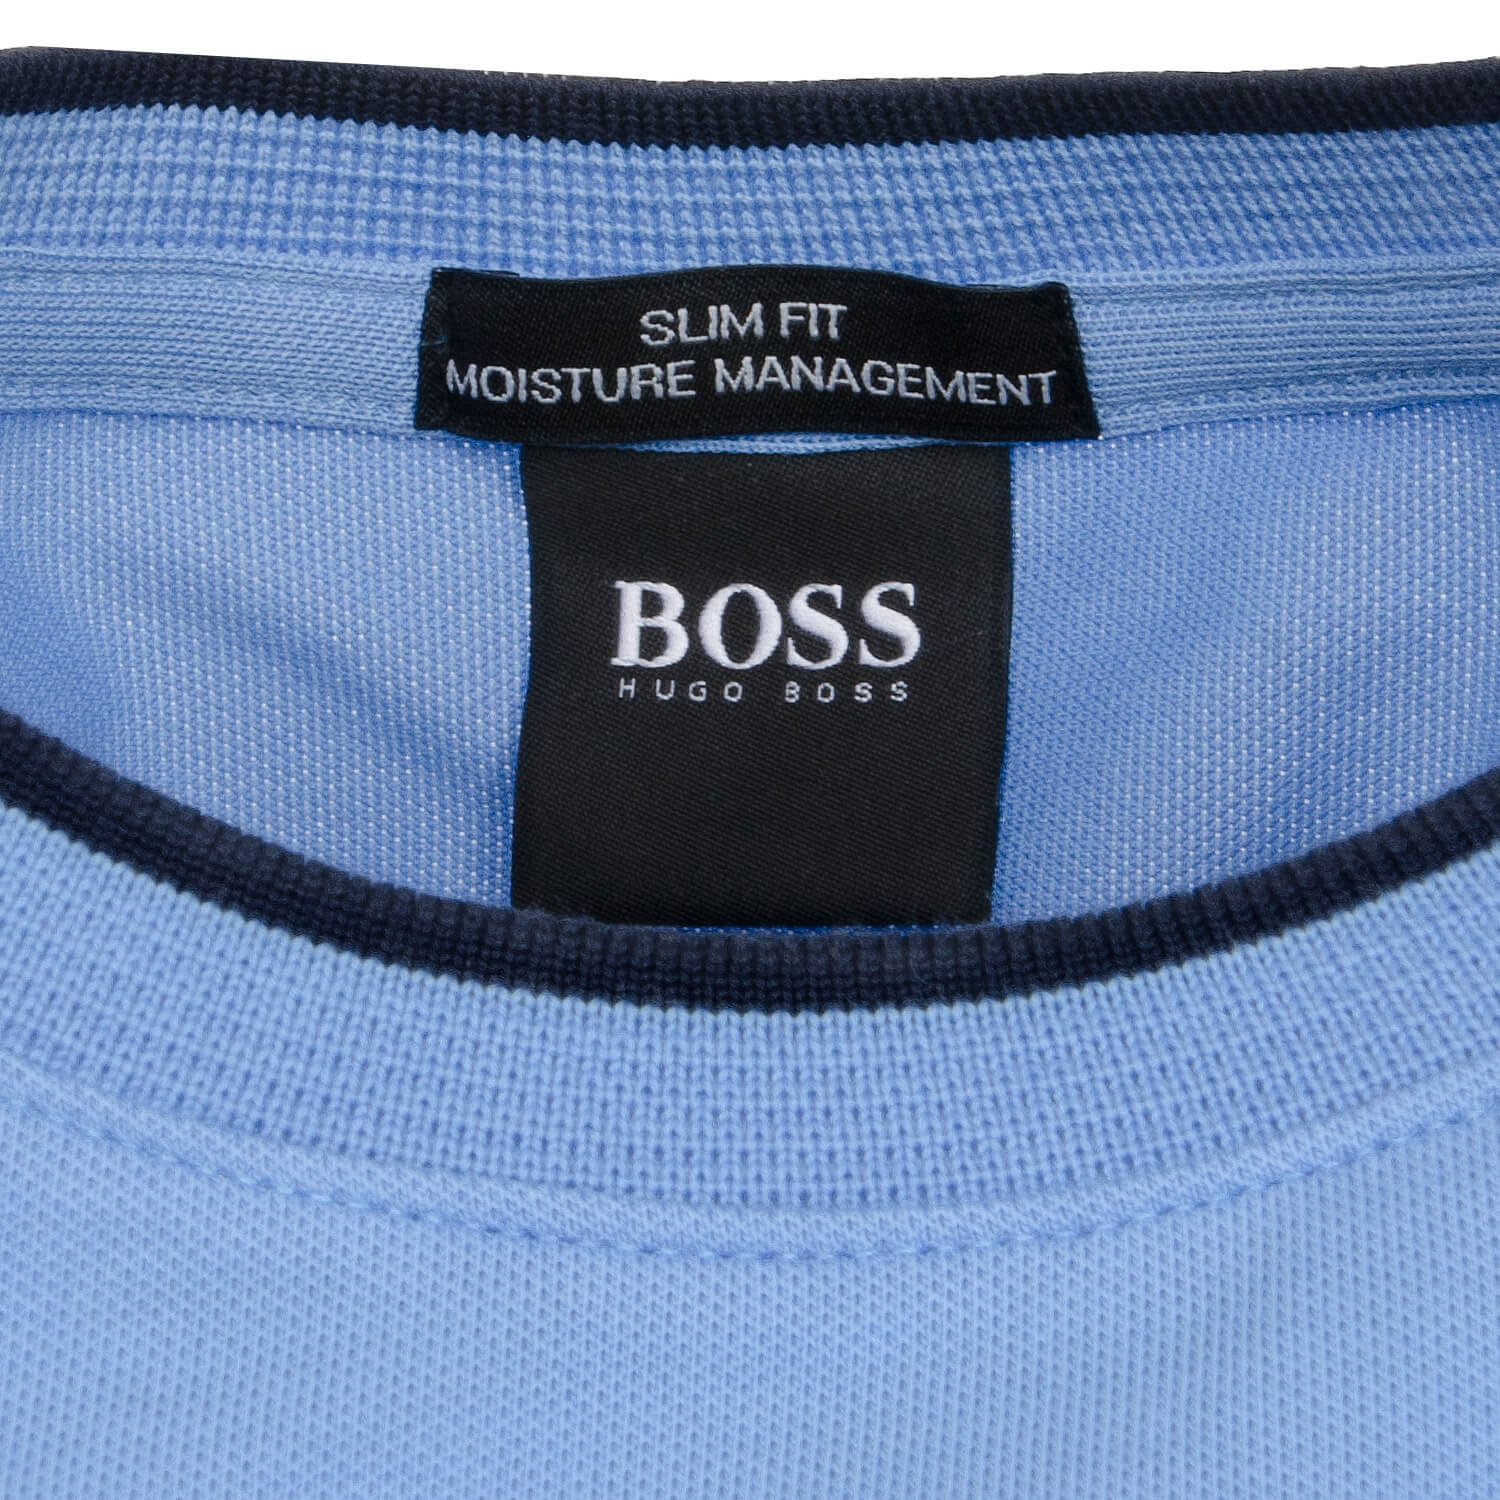 HUGO BOSS Tee Batch T-Shirt Bright Blue | Scottsdale Golf